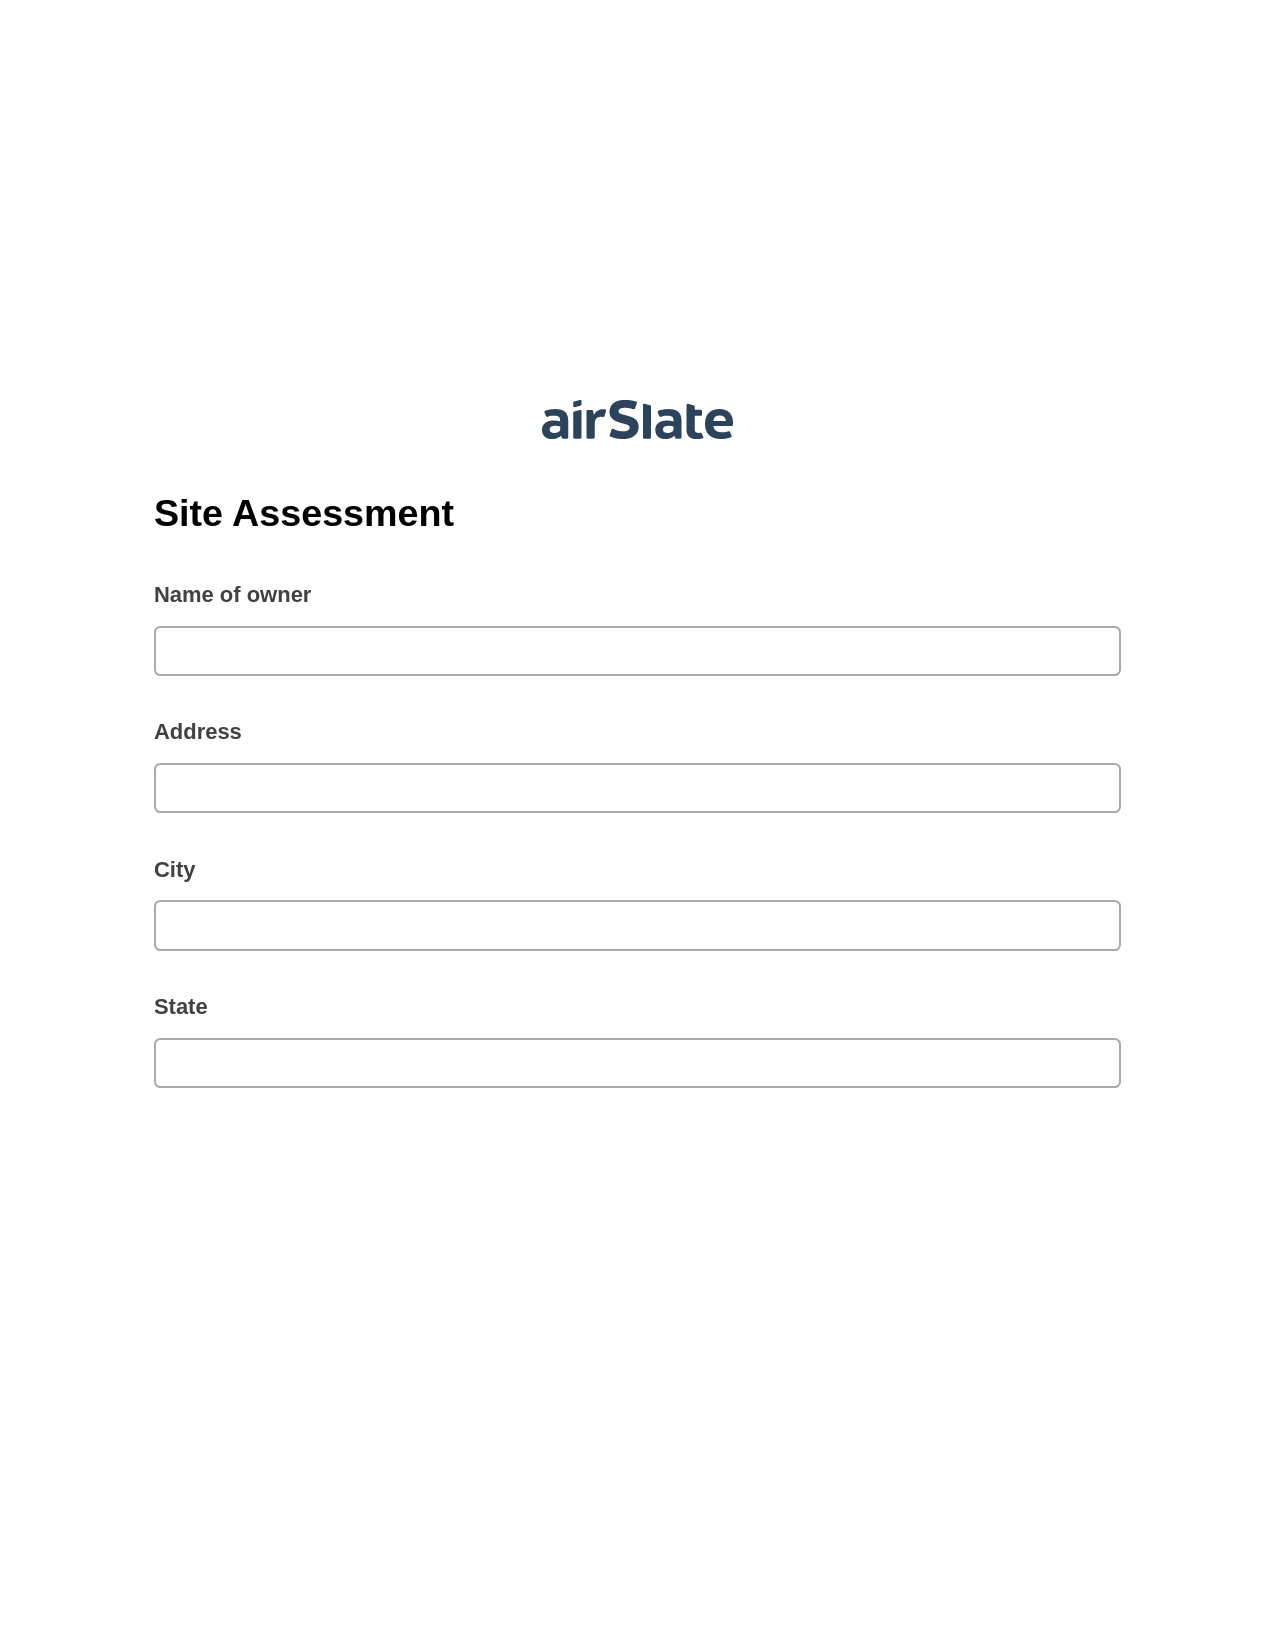 Multirole Site Assessment Pre-fill from CSV File Bot, Slack Notification Bot, Slack Two-Way Binding Bot